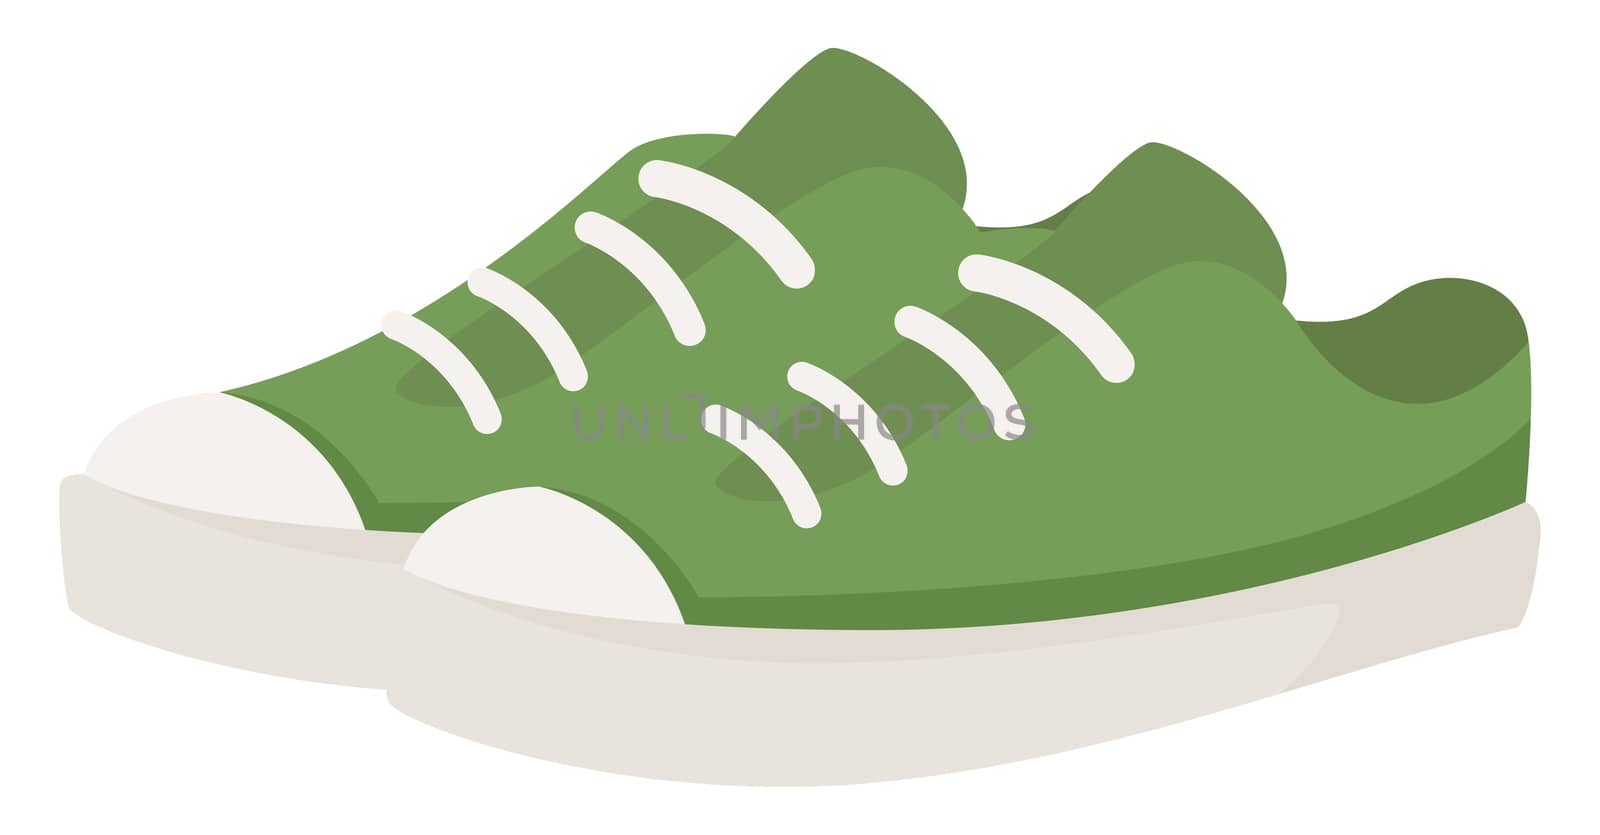 Green summer sneakers, illustration, vector on white background by Morphart